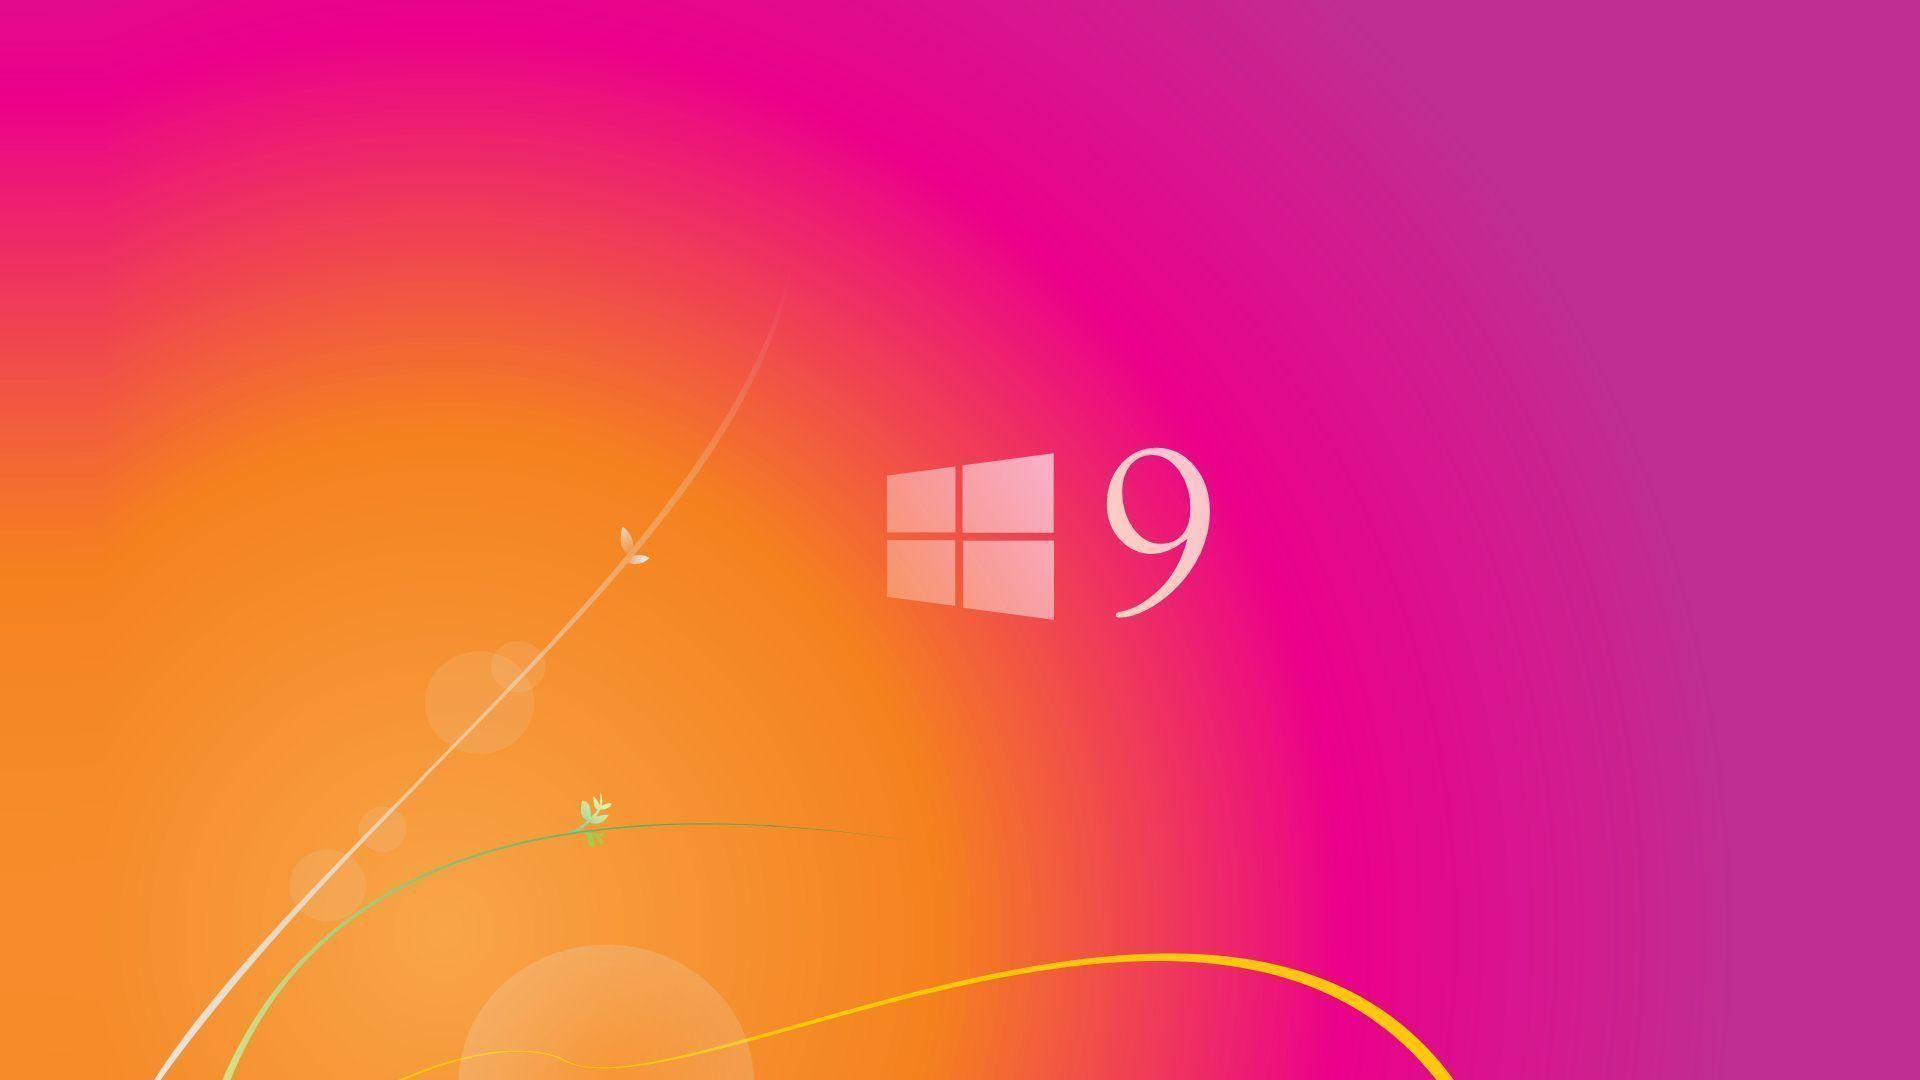 Windows 9 HD Wallpaper and Desktop Themes. Windows 8.1 Themes